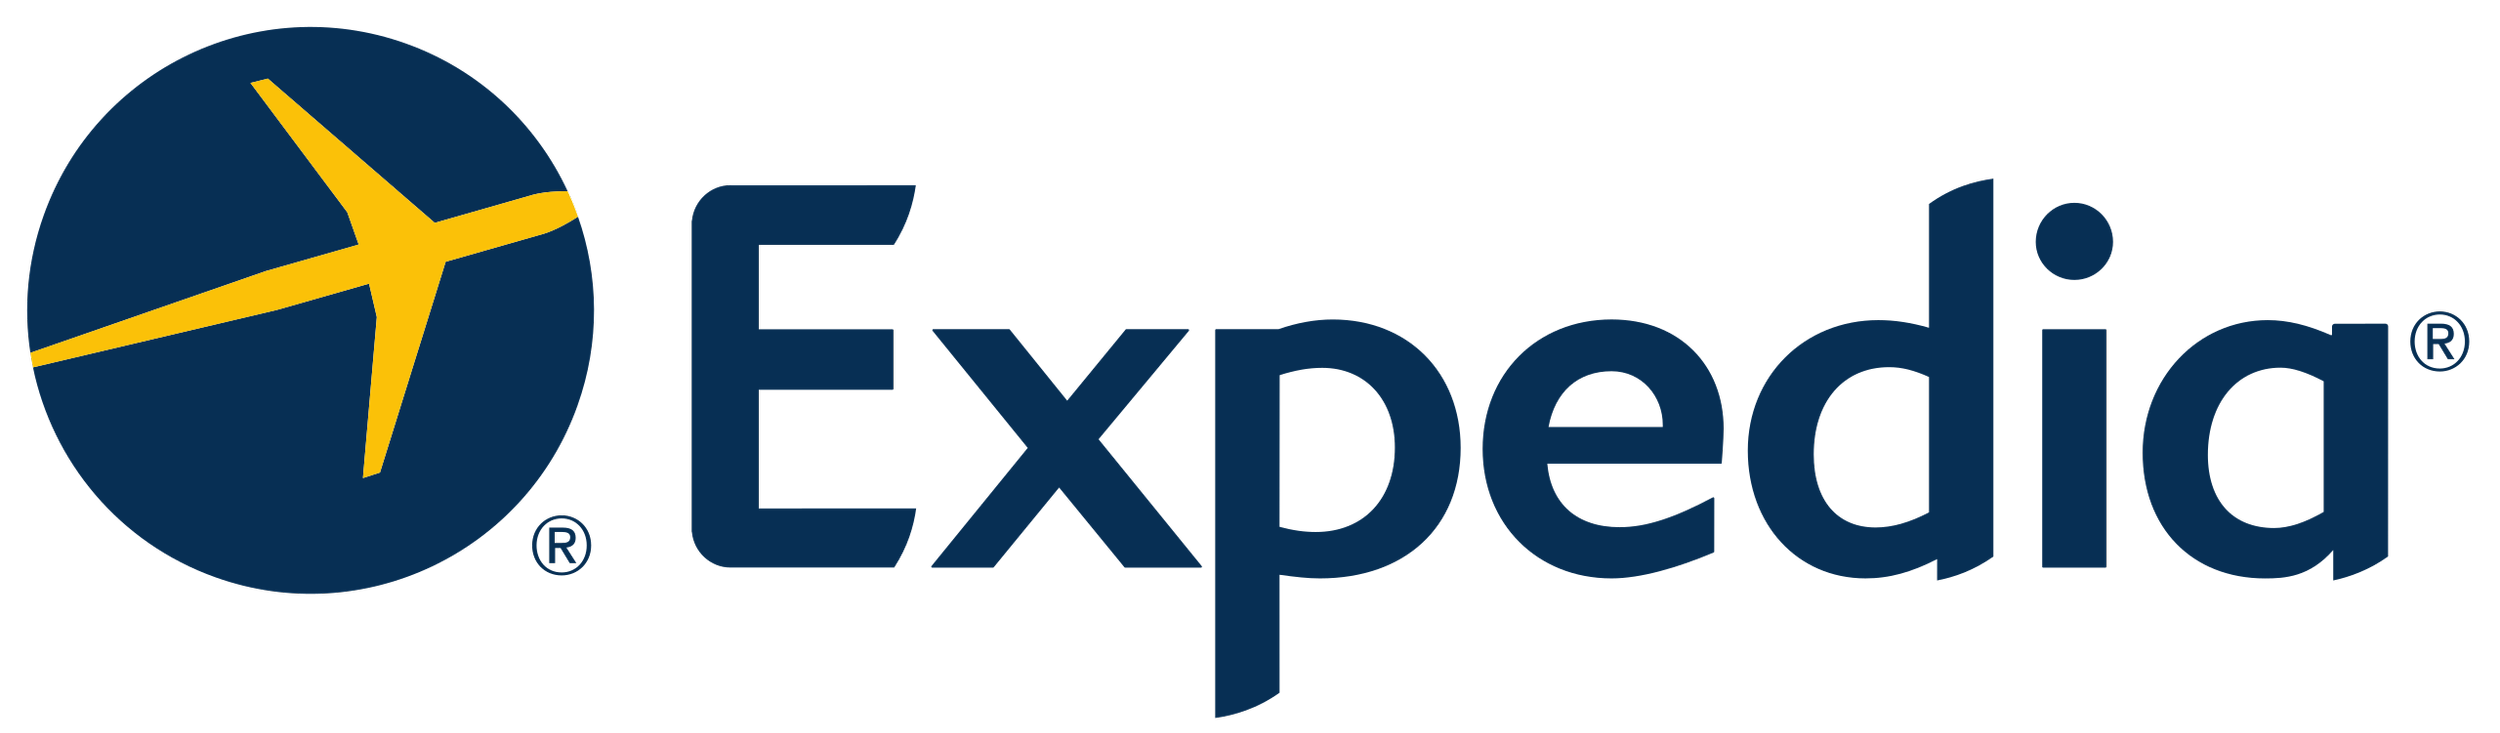 Expedia_2012_logo.svg.png